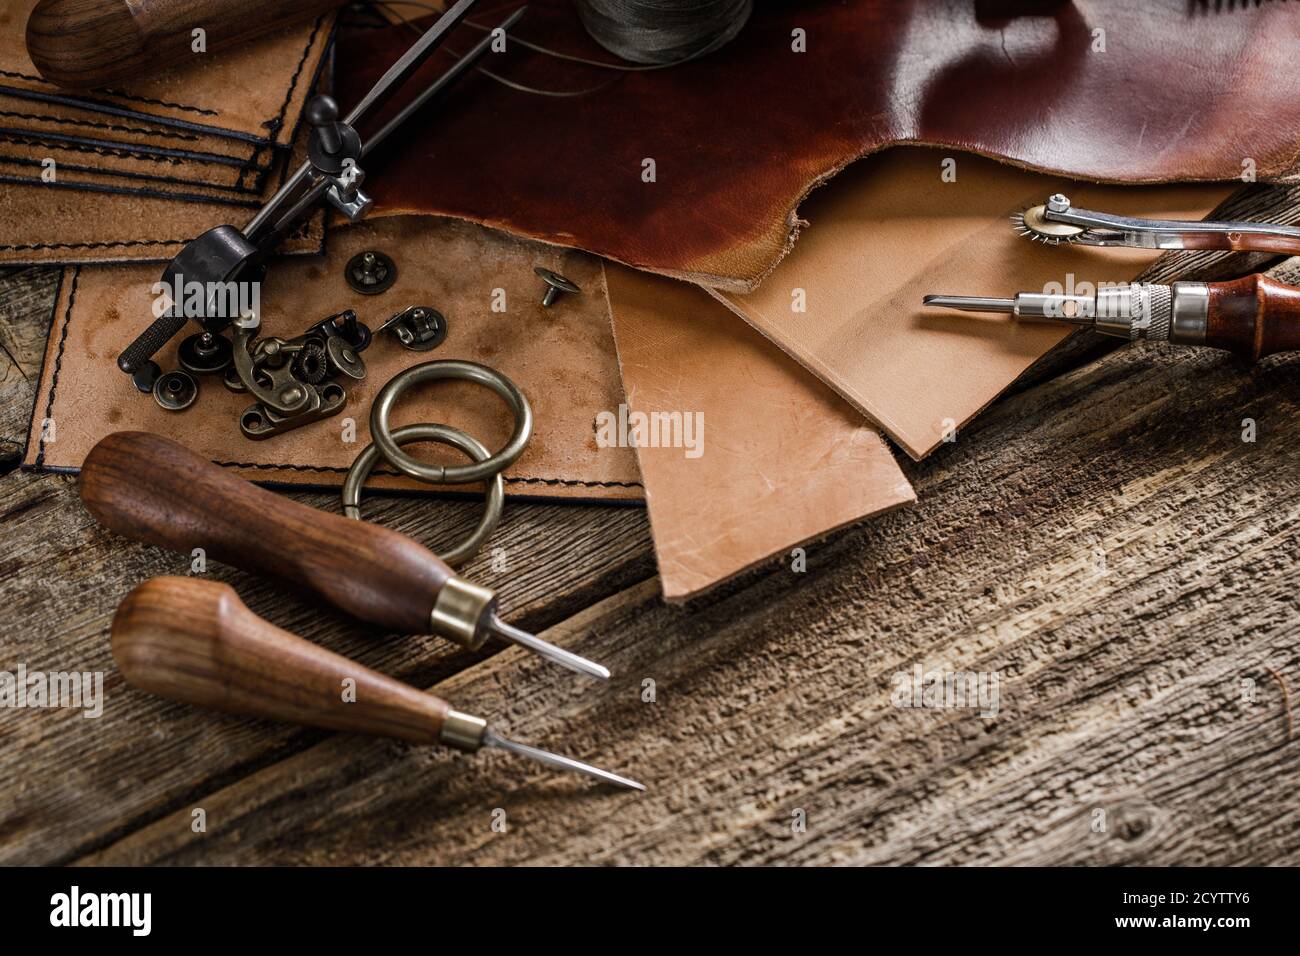 Leathercraft tools Stock Photo by ©karnauhov 79178240